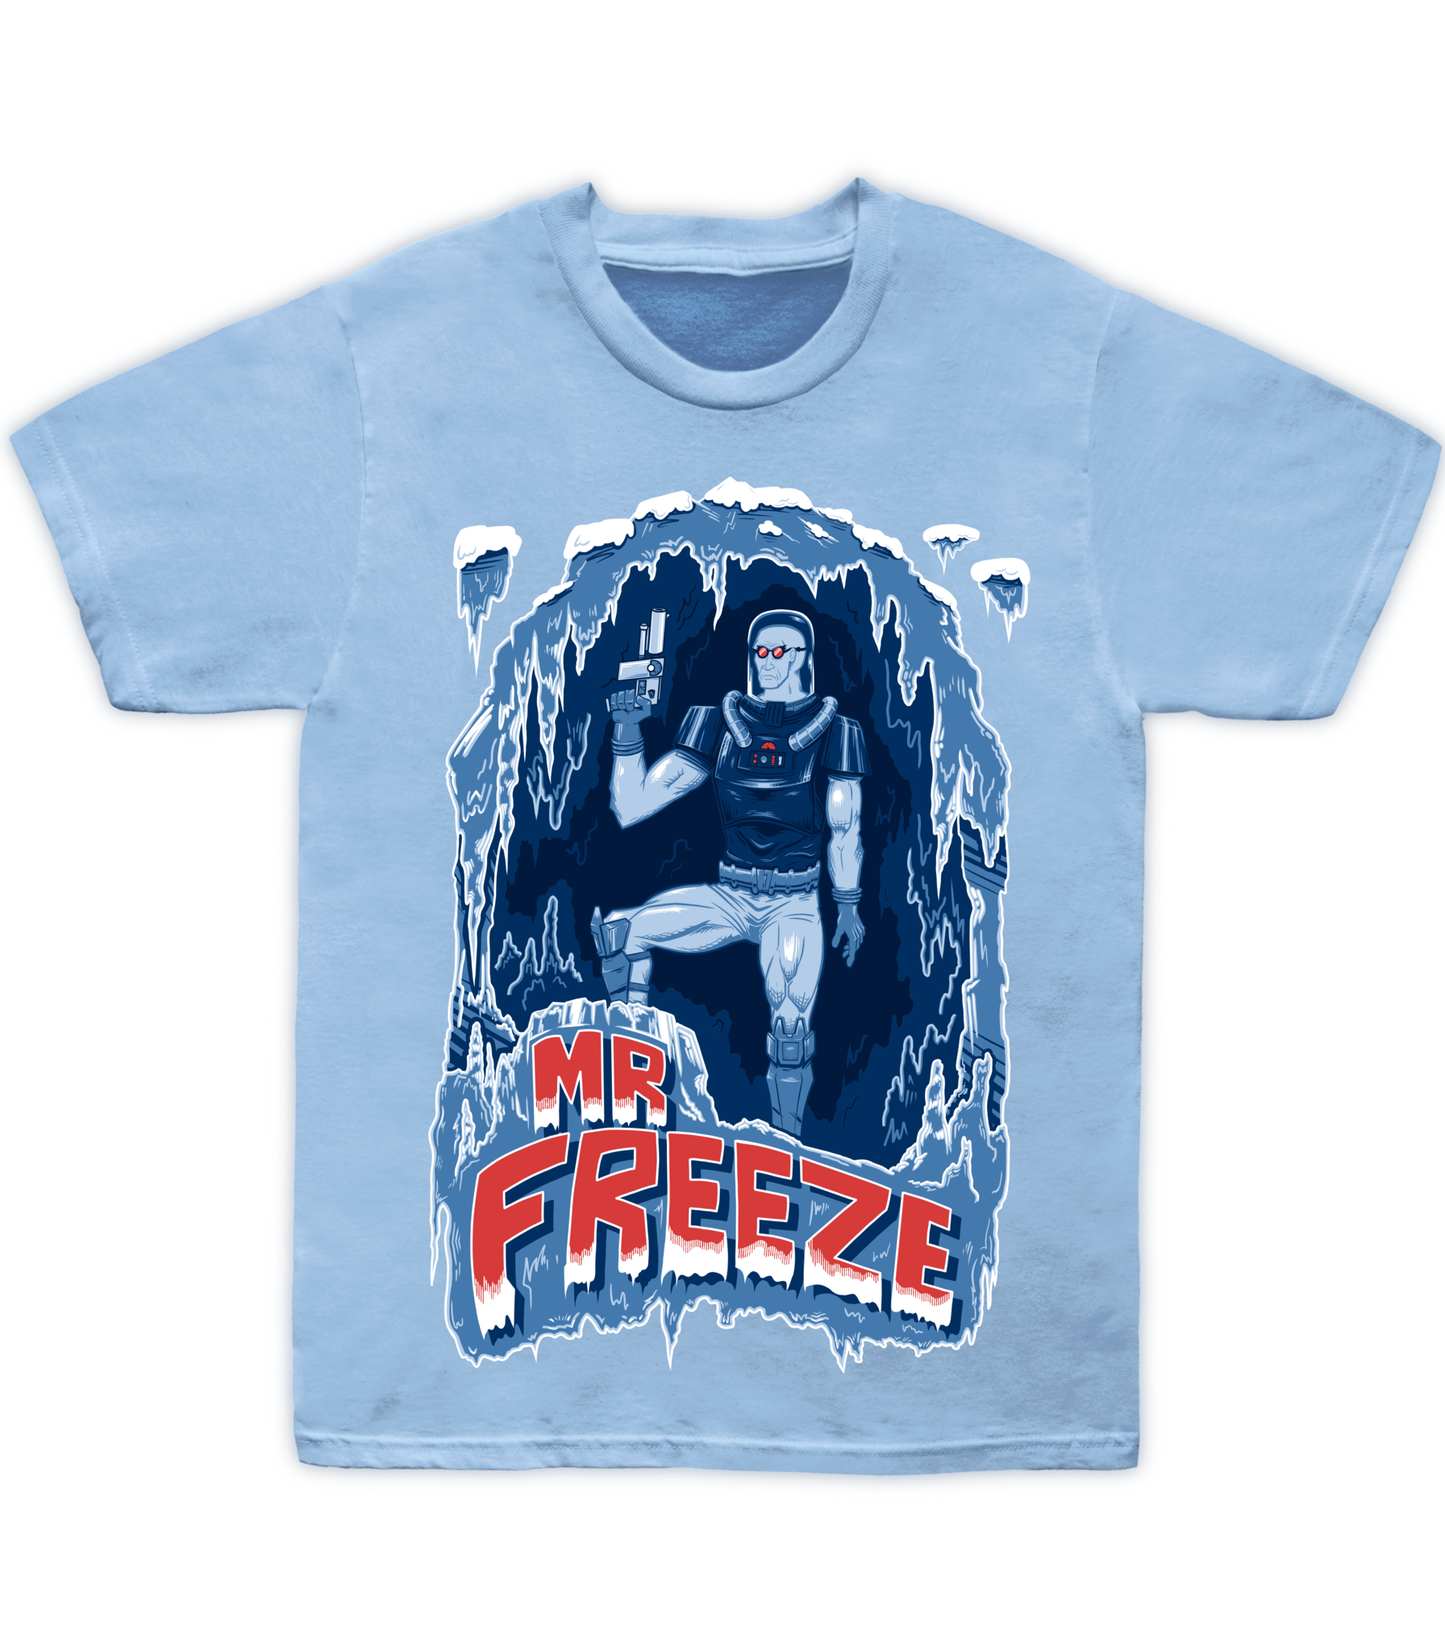 "Mr. Freeze" Graphic Tee